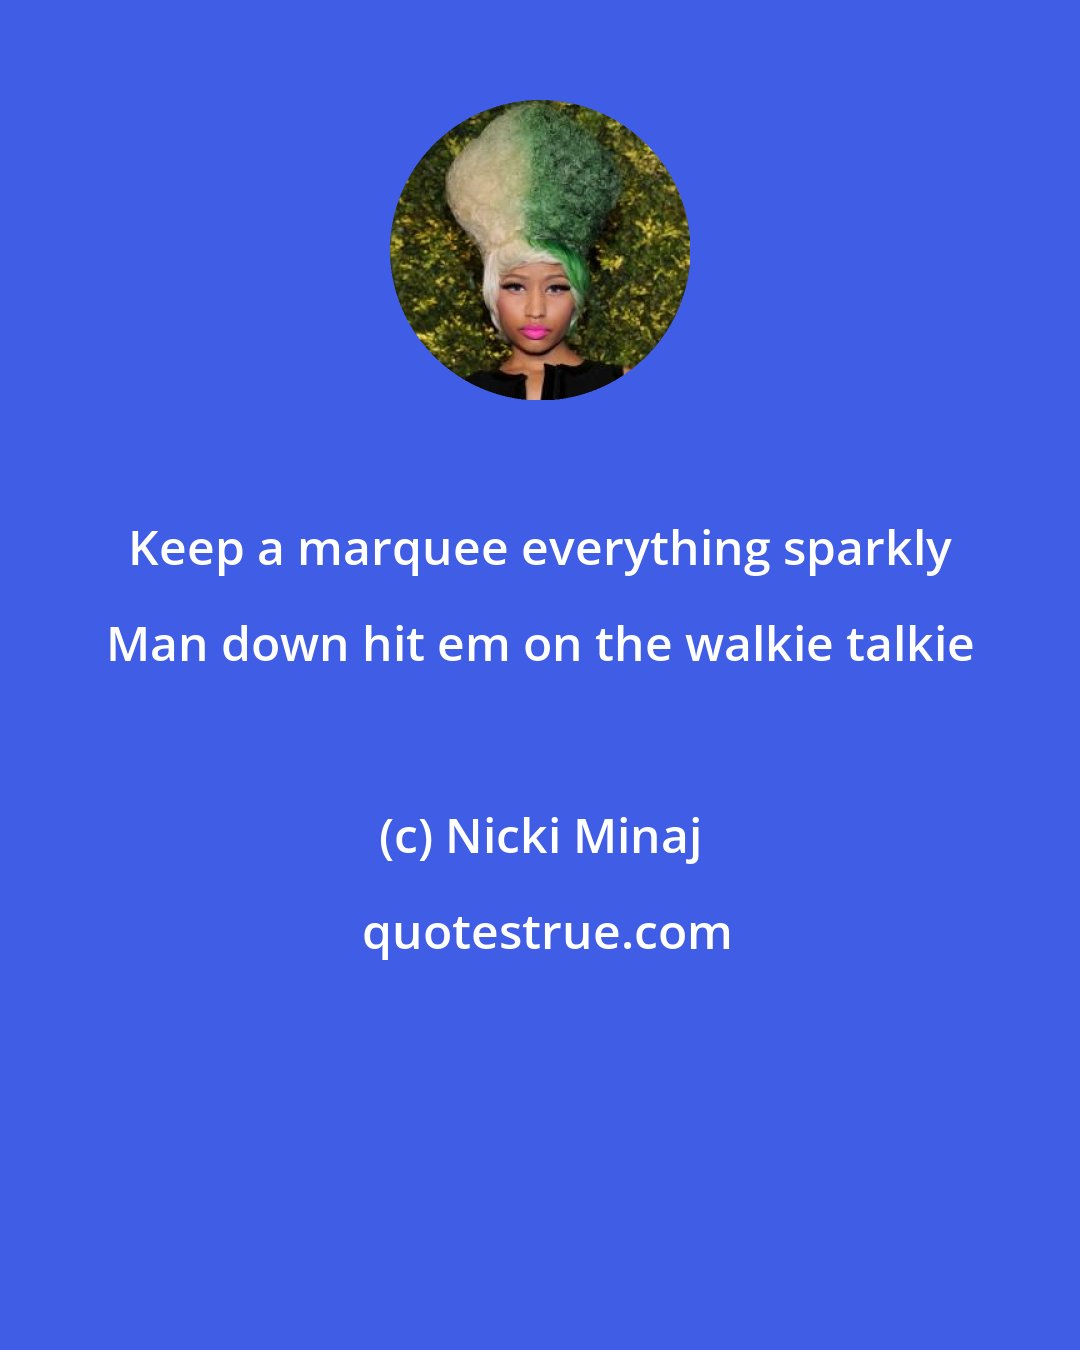 Nicki Minaj: Keep a marquee everything sparkly Man down hit em on the walkie talkie